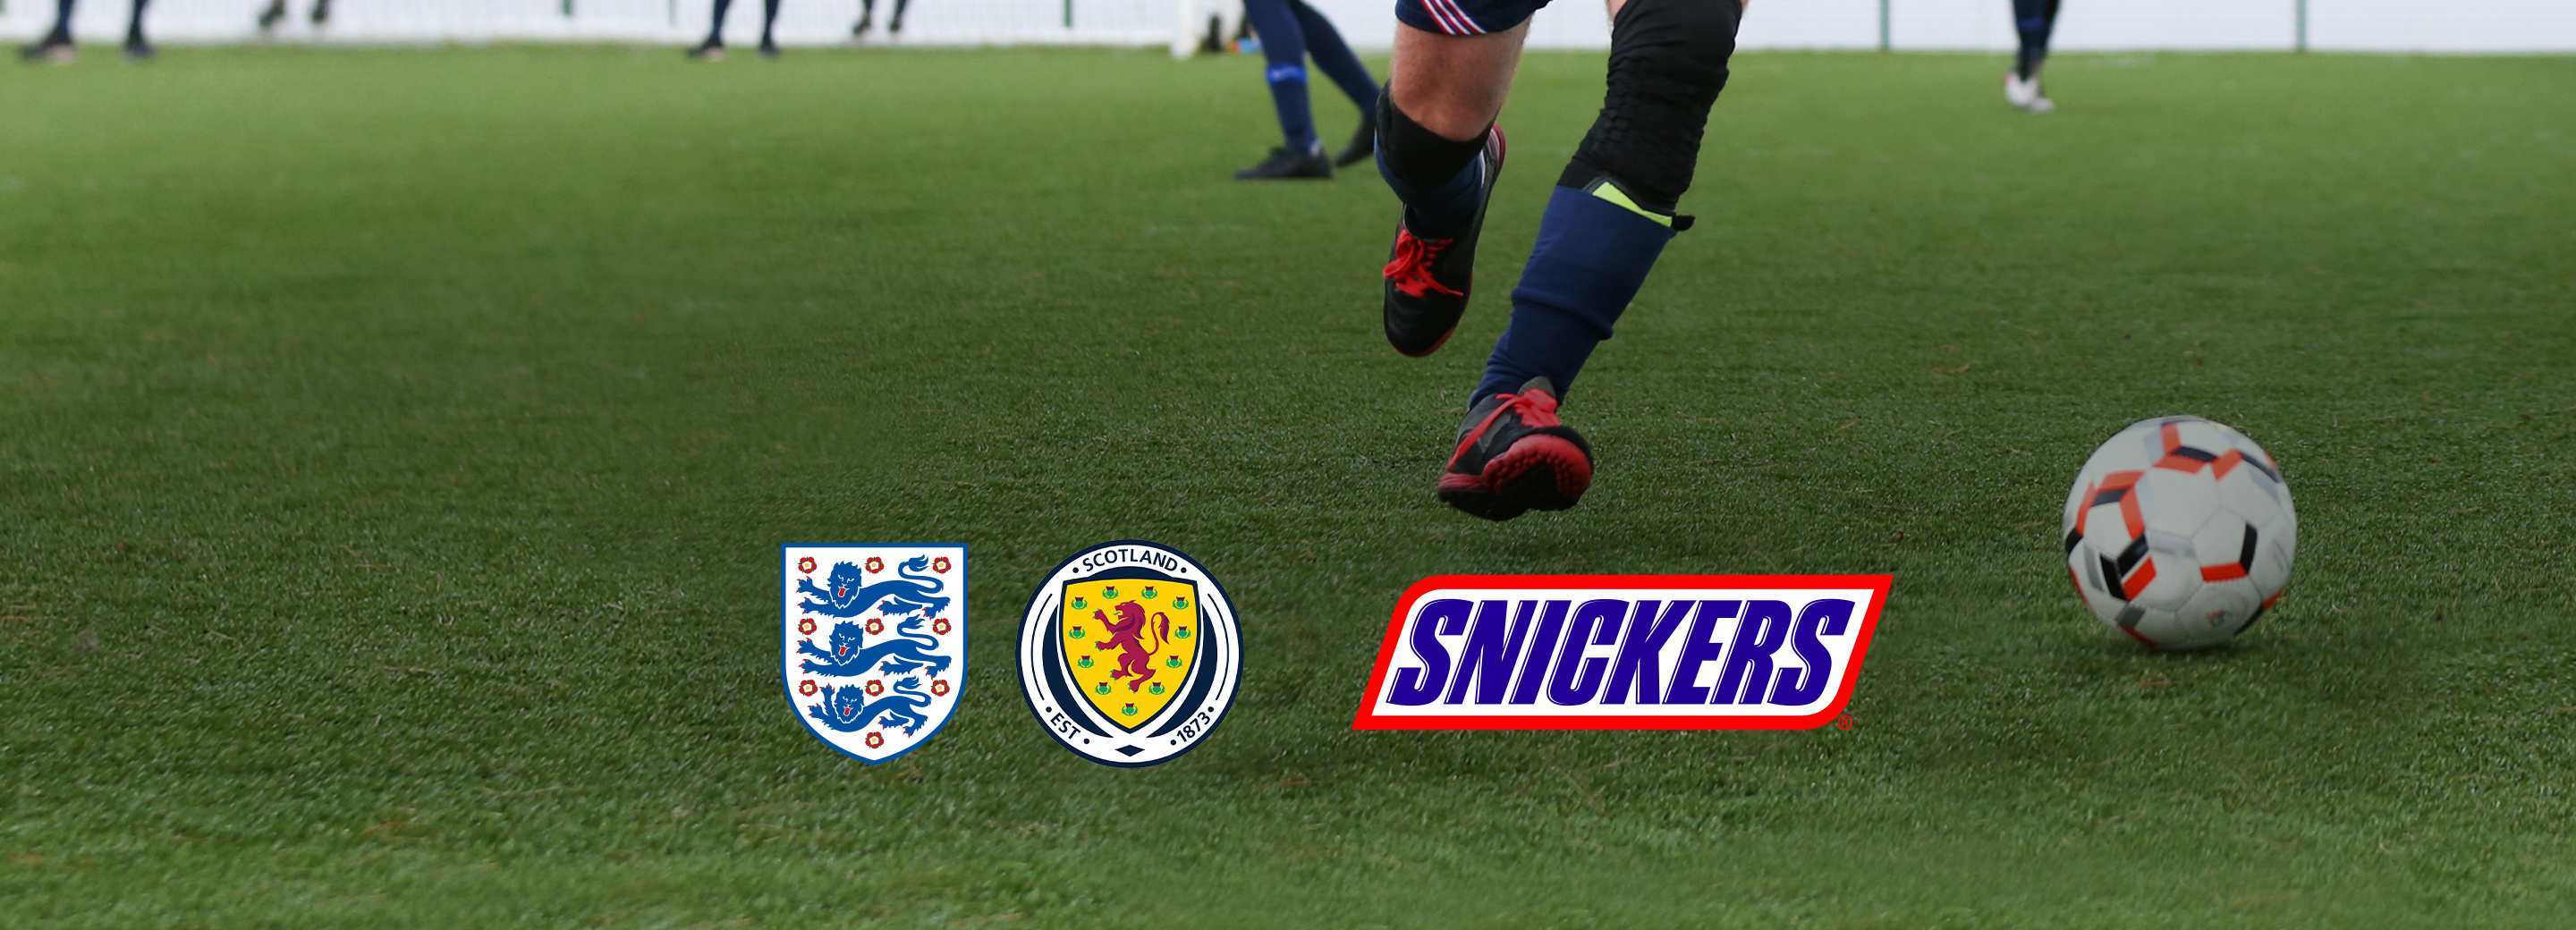 Snickers FA sponsorship header